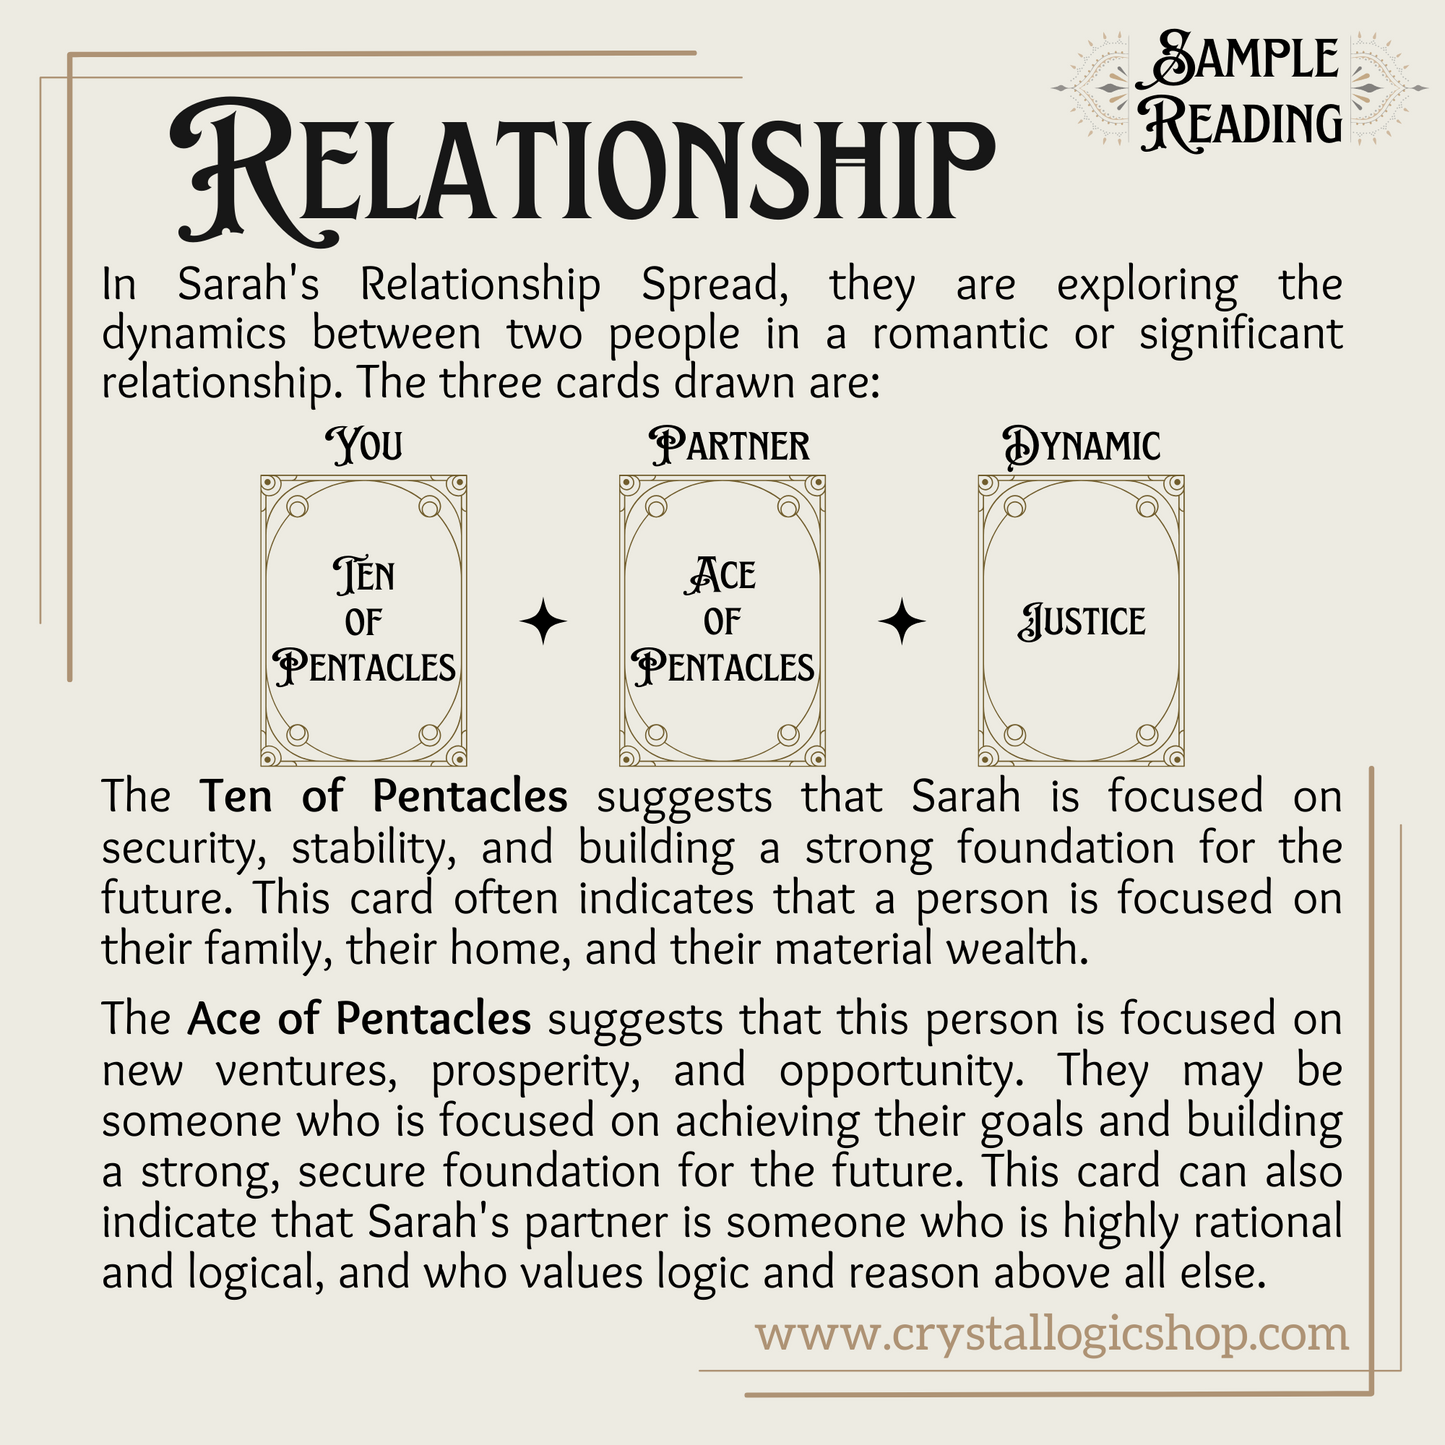 Relationship Blind Tarot Reading 3 Cards